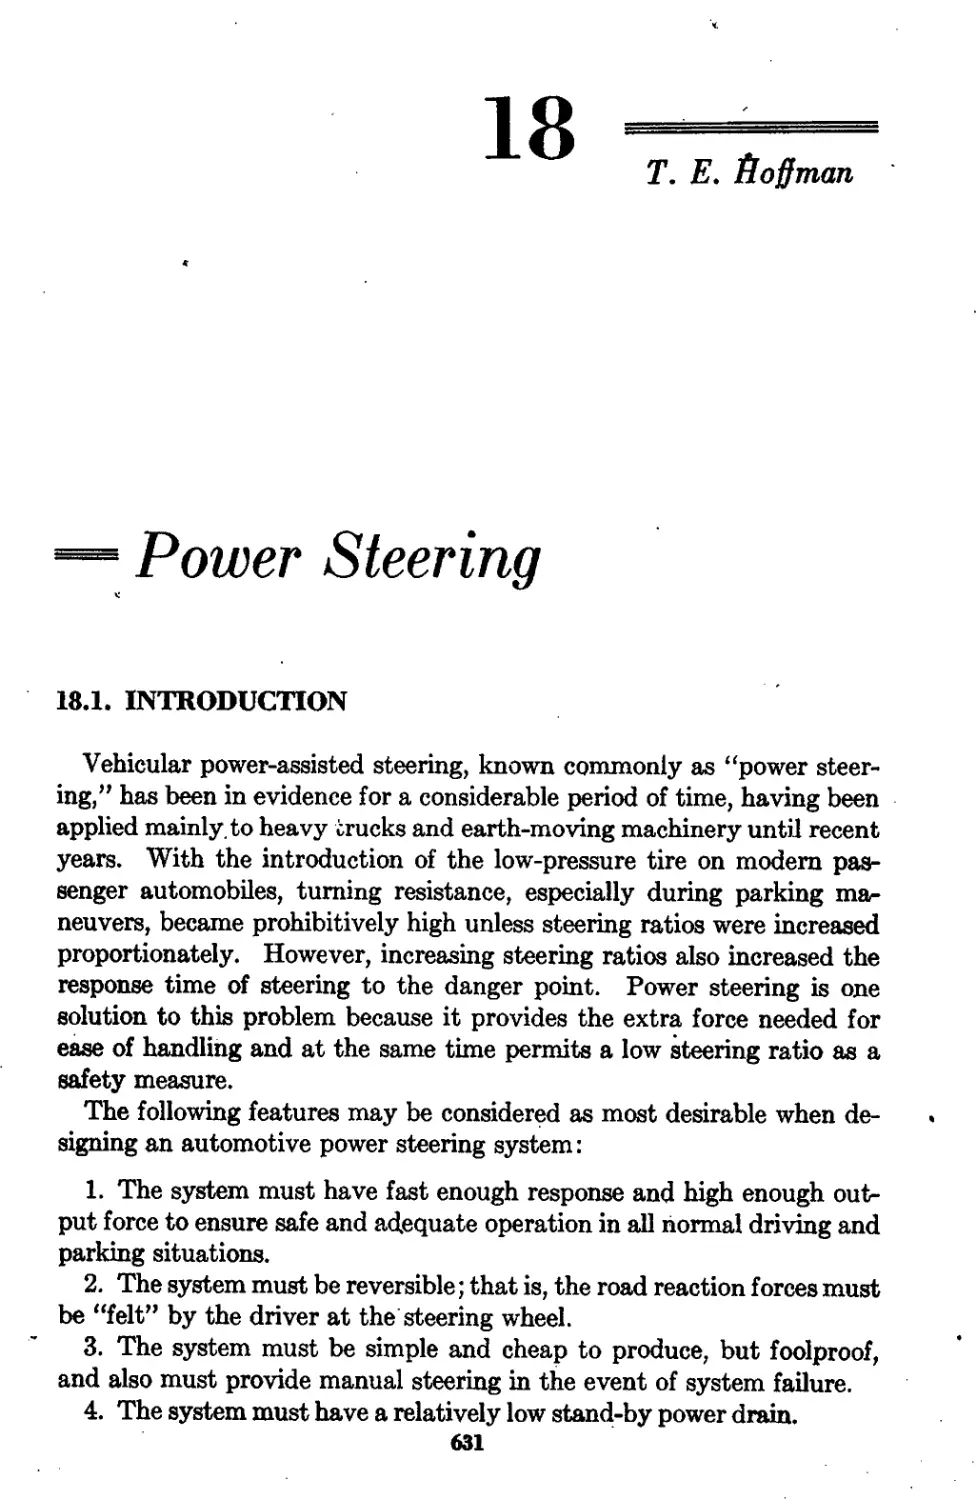 Chapter 18 Power Steering: T. E. Hoffman